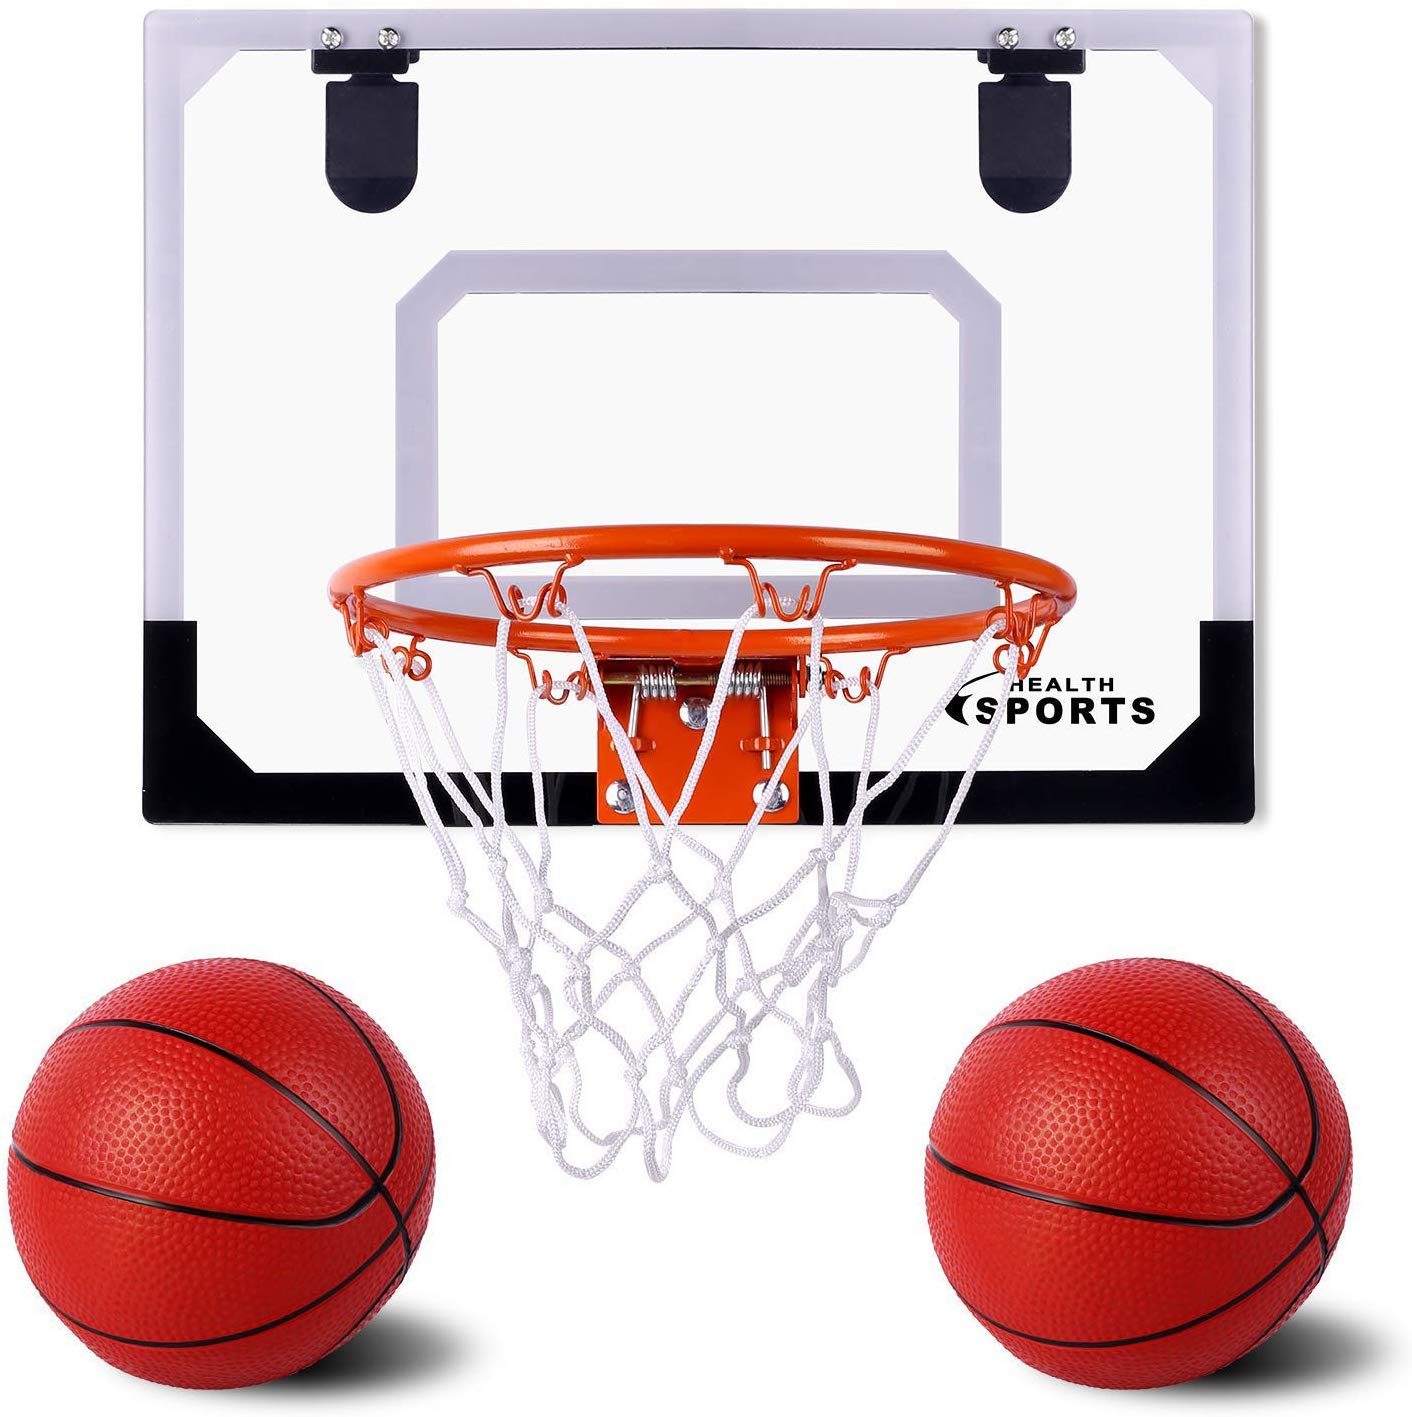 Super Joy Indoor Mini Basketball Hoop and Balls 17.8 x 14